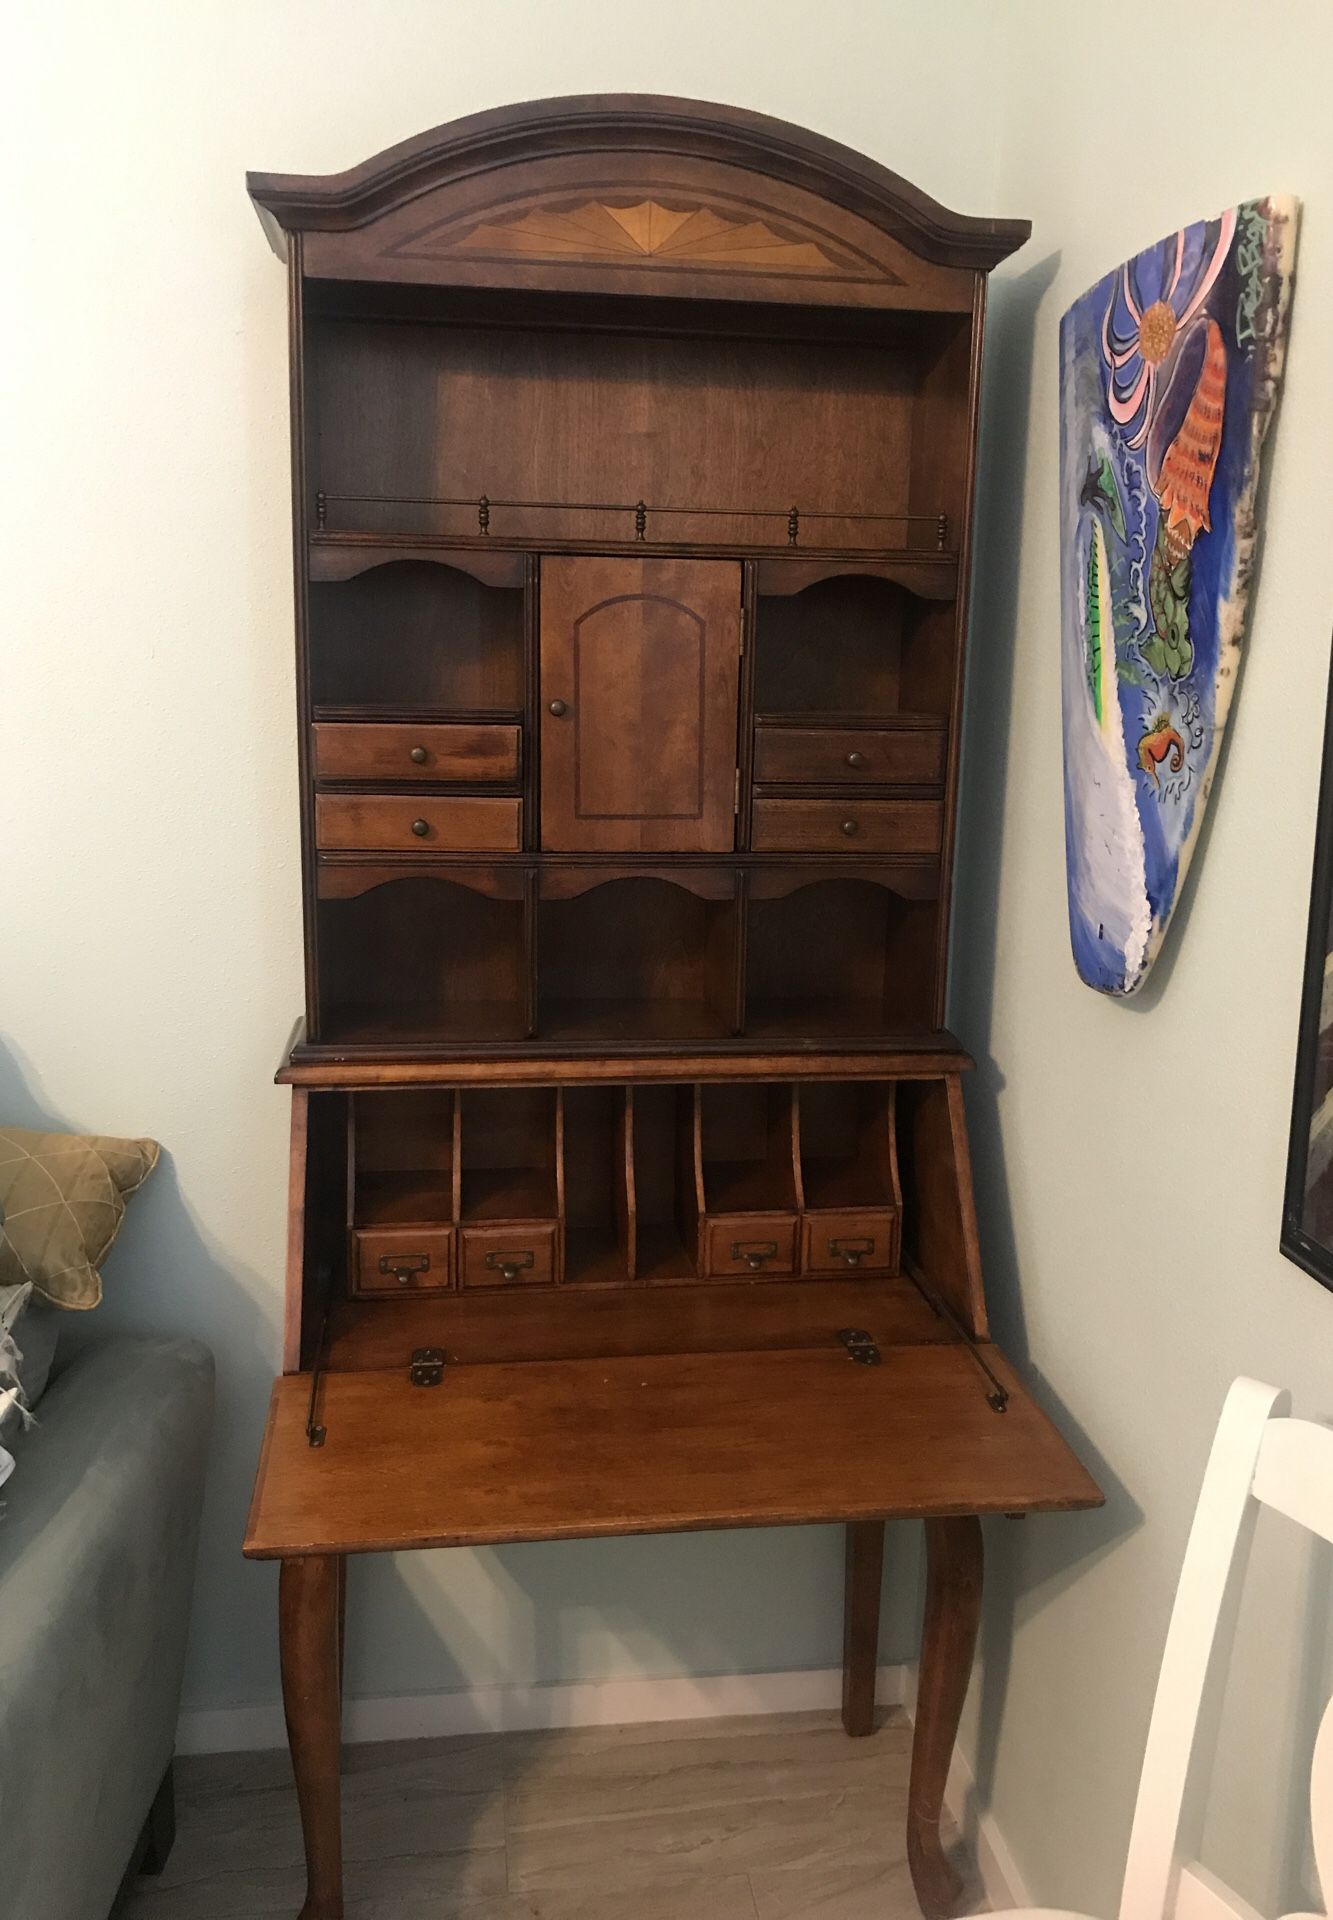 Antique secretary desk-2 pieces